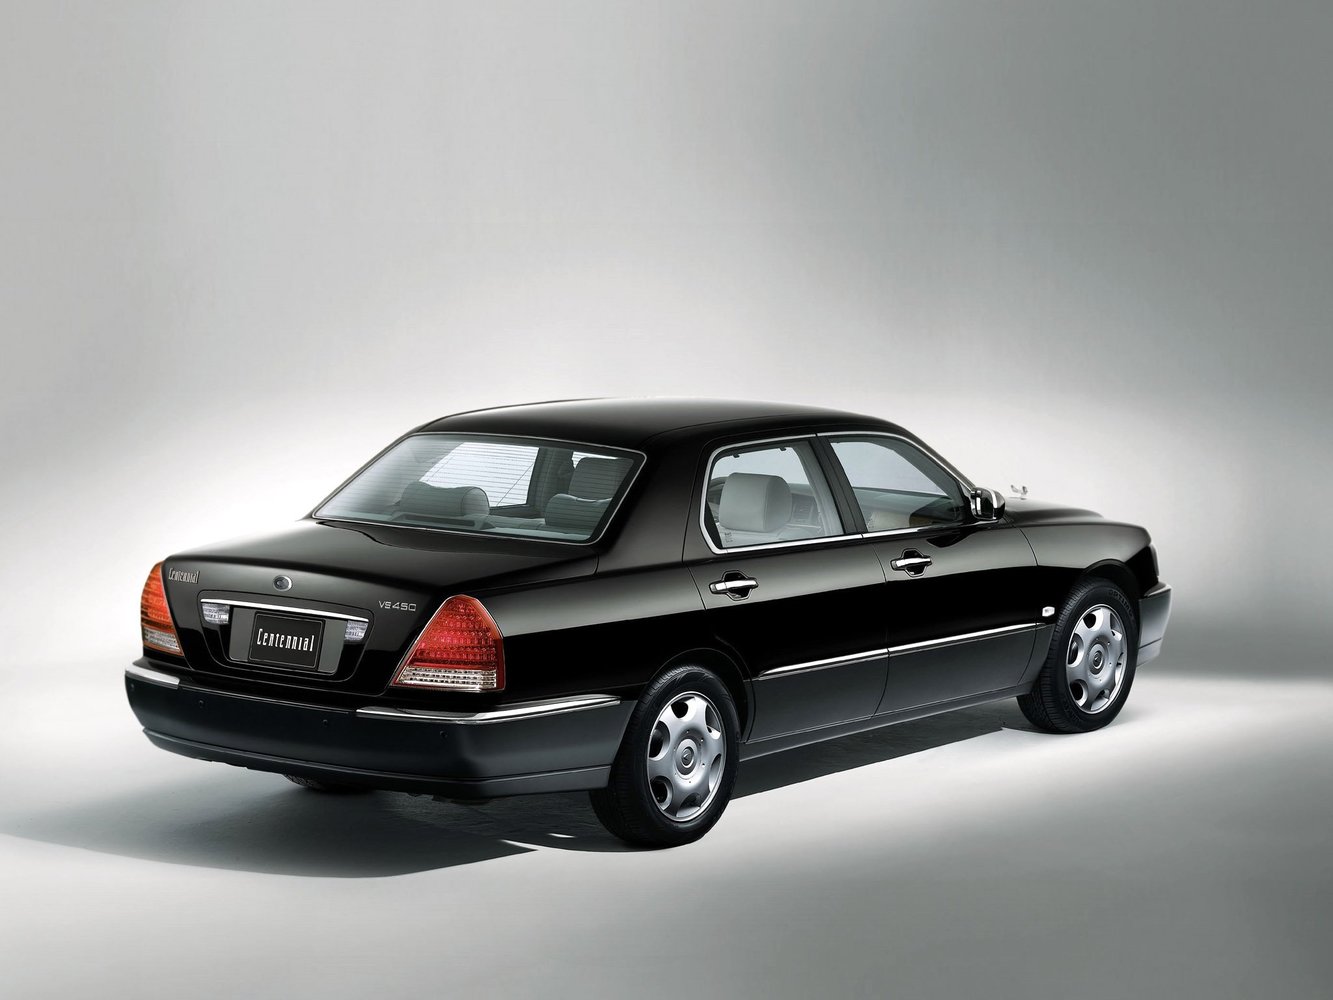 седан Hyundai Centennial 1999 - 2008г выпуска модификация 3.5 AT (210 л.с.)